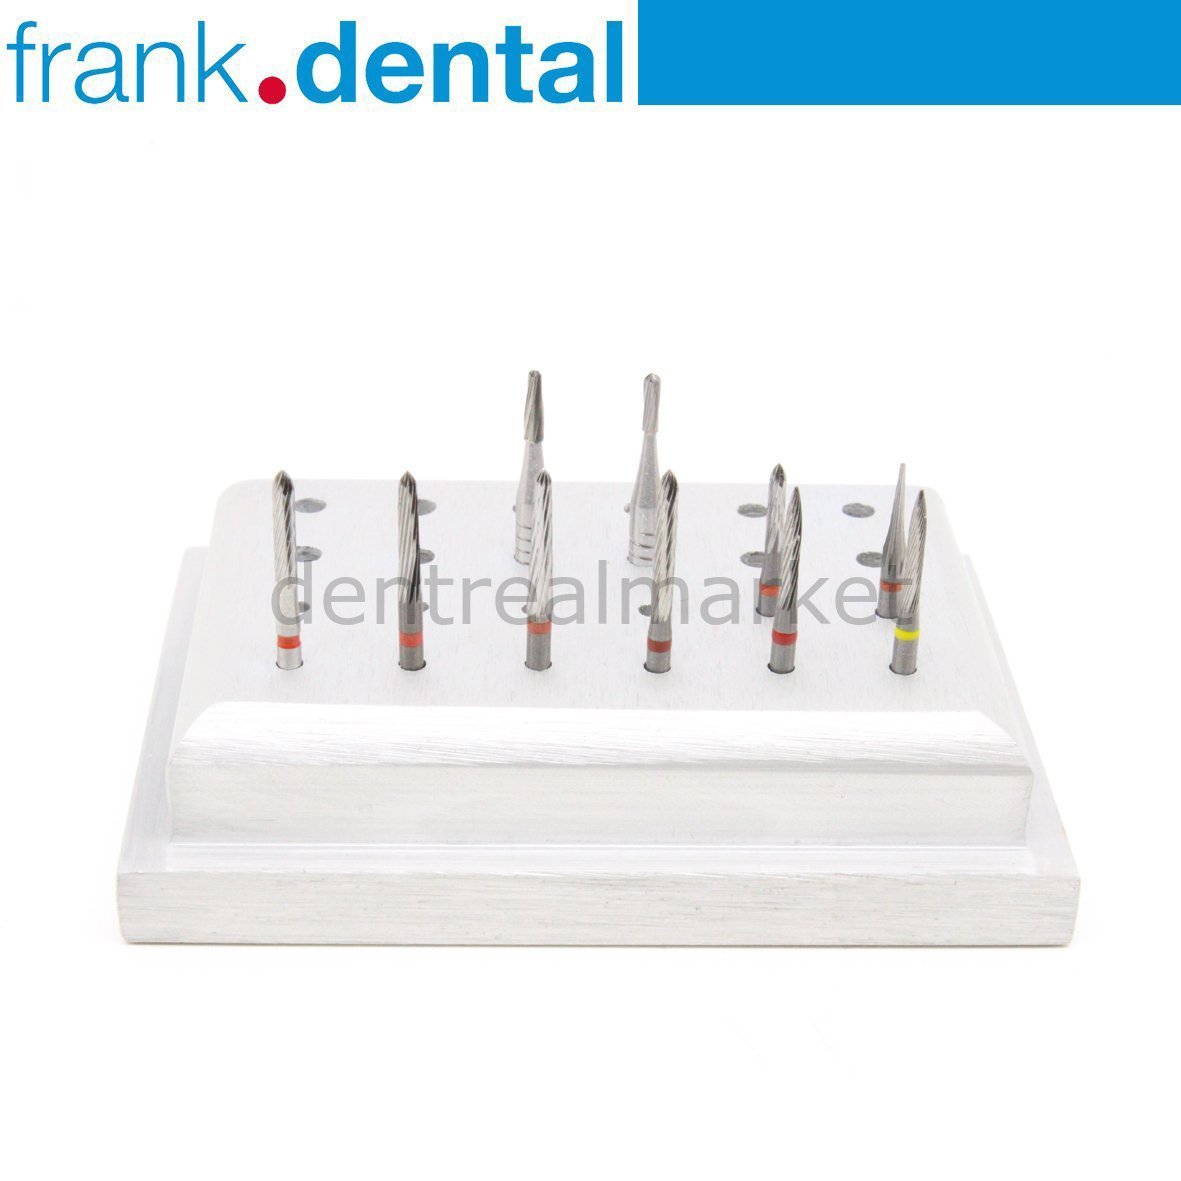 DentrealStore - Frank Dental Orthodontic Adhesive Remover & Debonding Bur Set